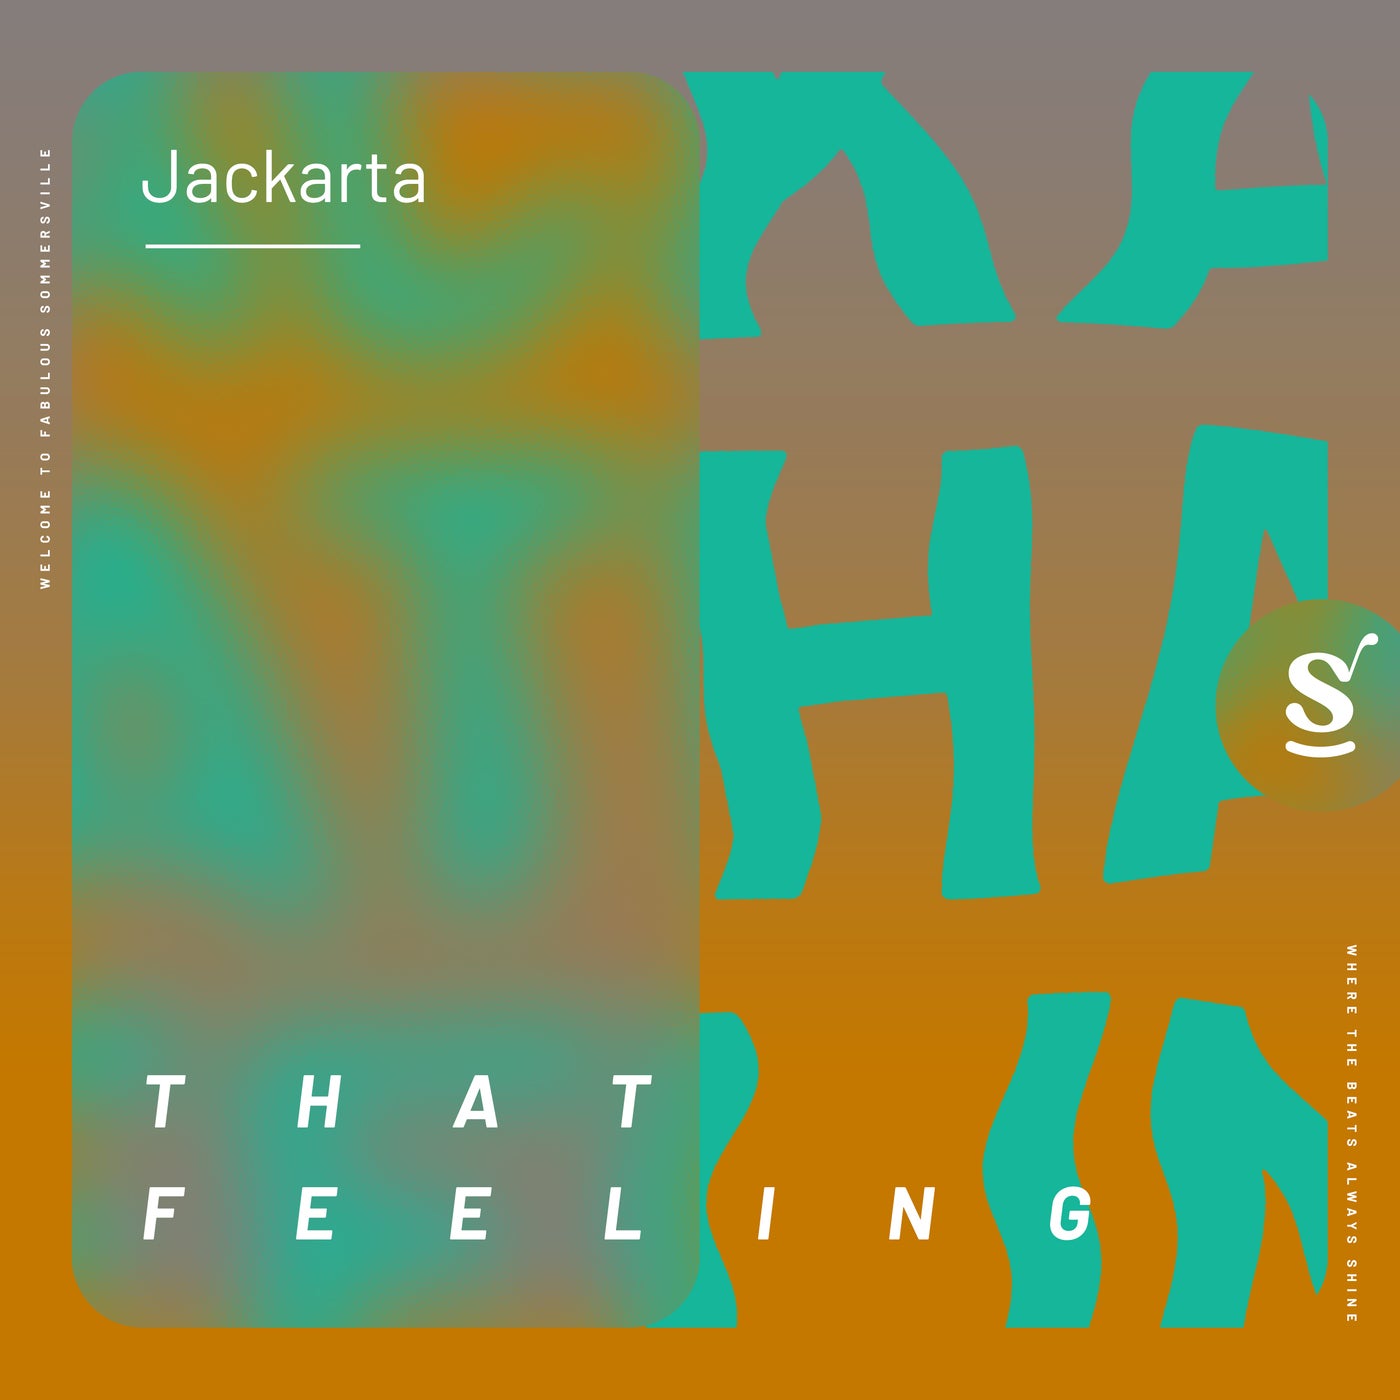 Jackarta - That Feeling (extended Mix) on Revolution Radio